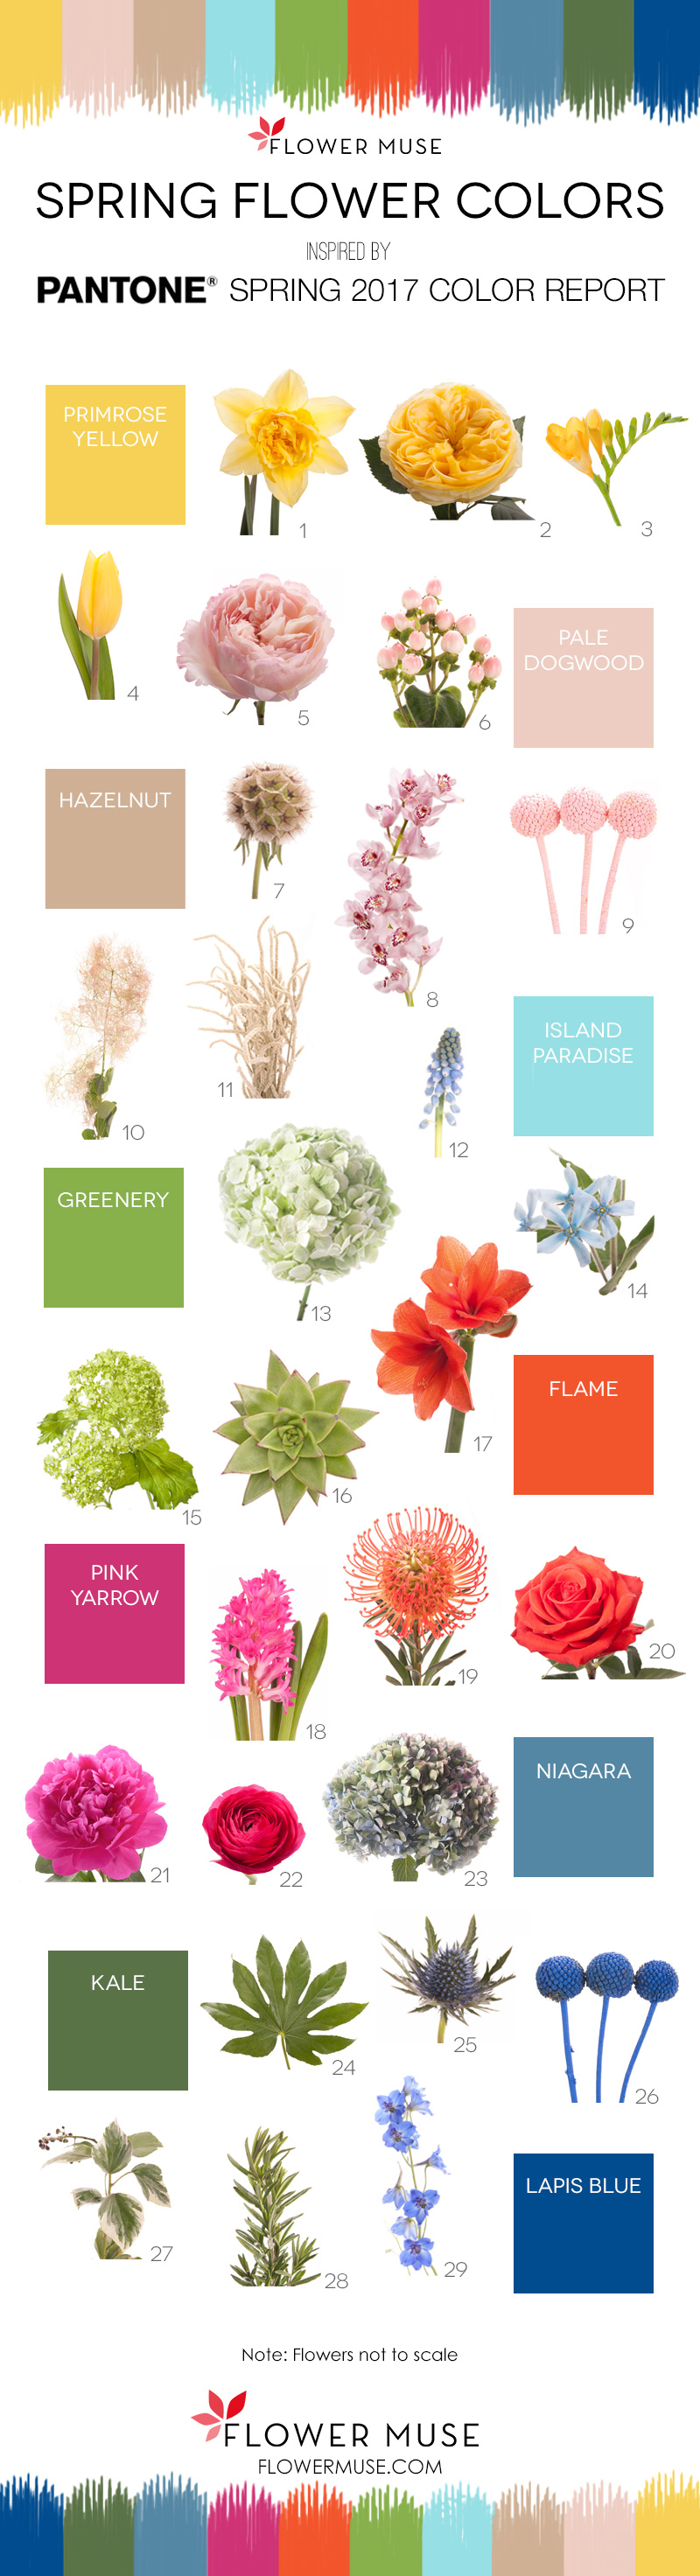 2017 Spring Flowers - Pantone Inspiration | Flower Muse Blog